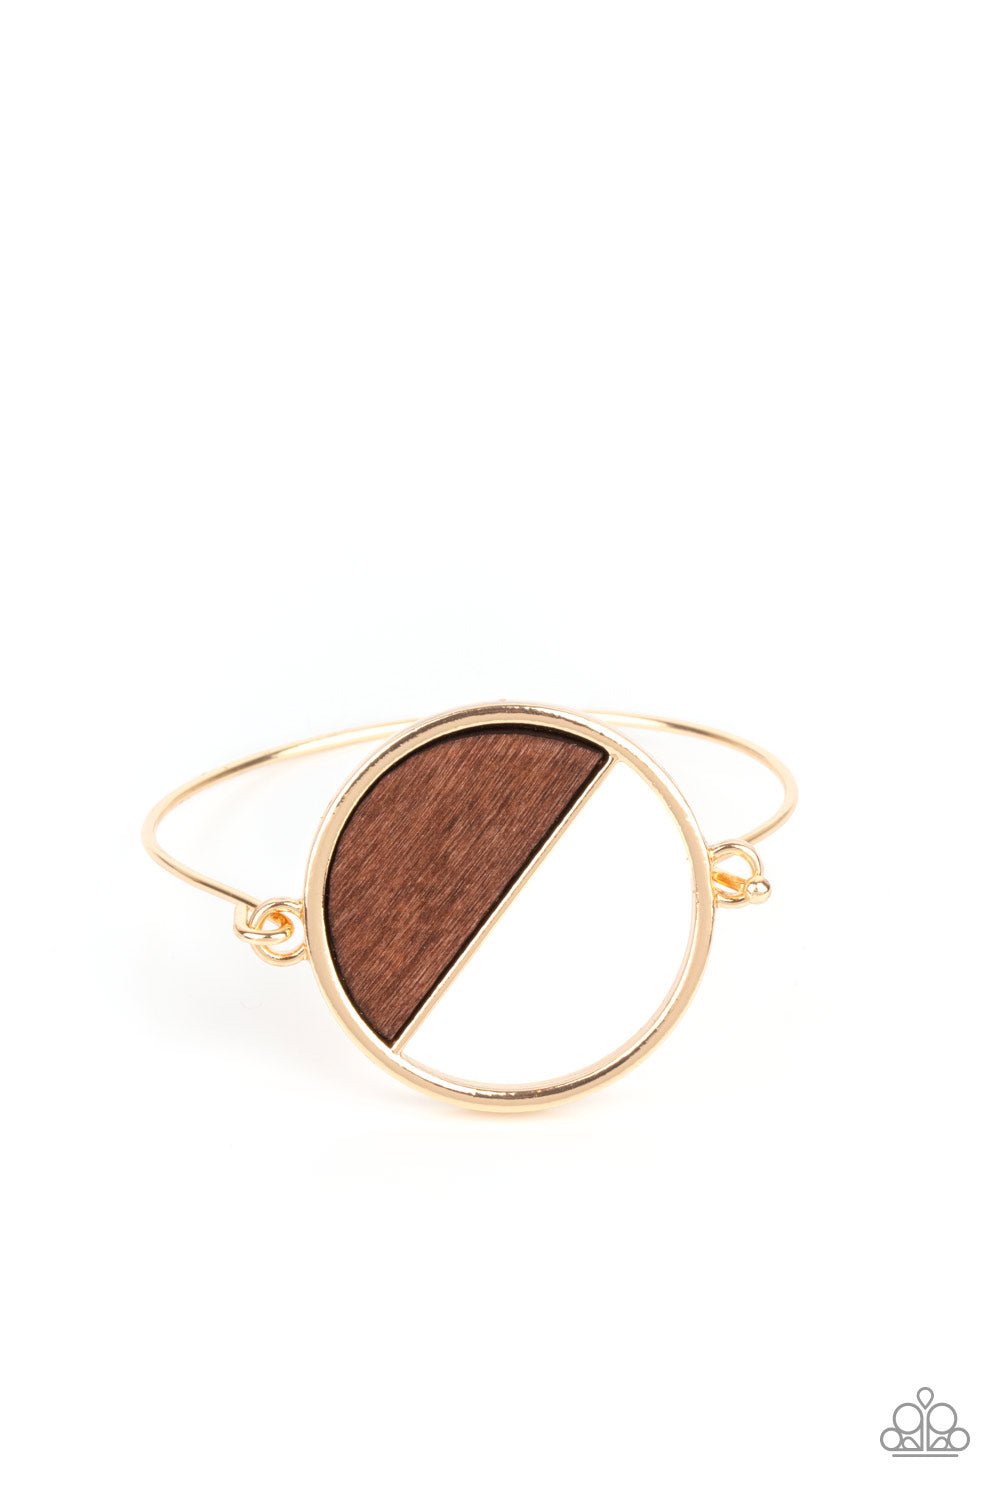 Timber Trade Gold
Bracelet - Daria's Blings N Things